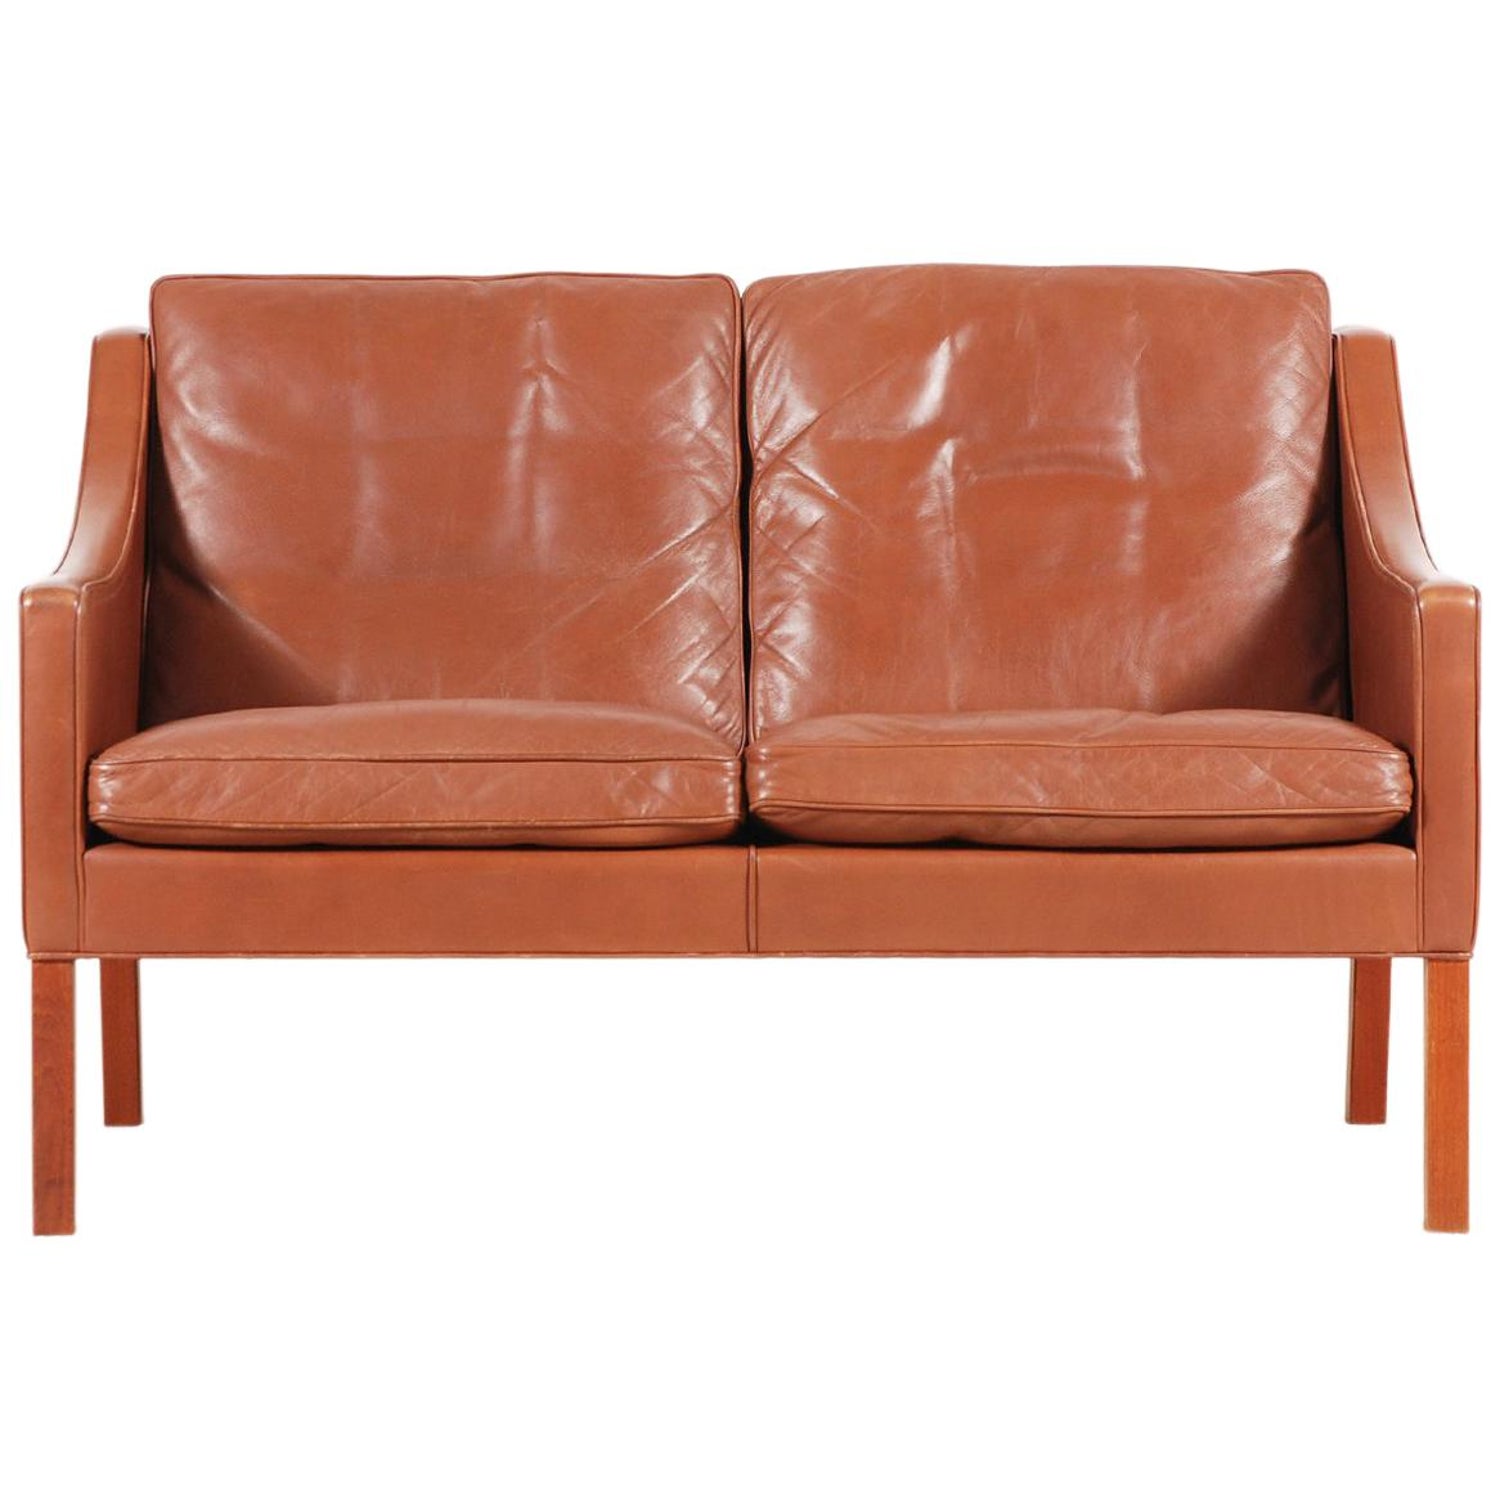 Børge Mogensen Model #2208 Two-Seat Sofa For Sale at 1stDibs